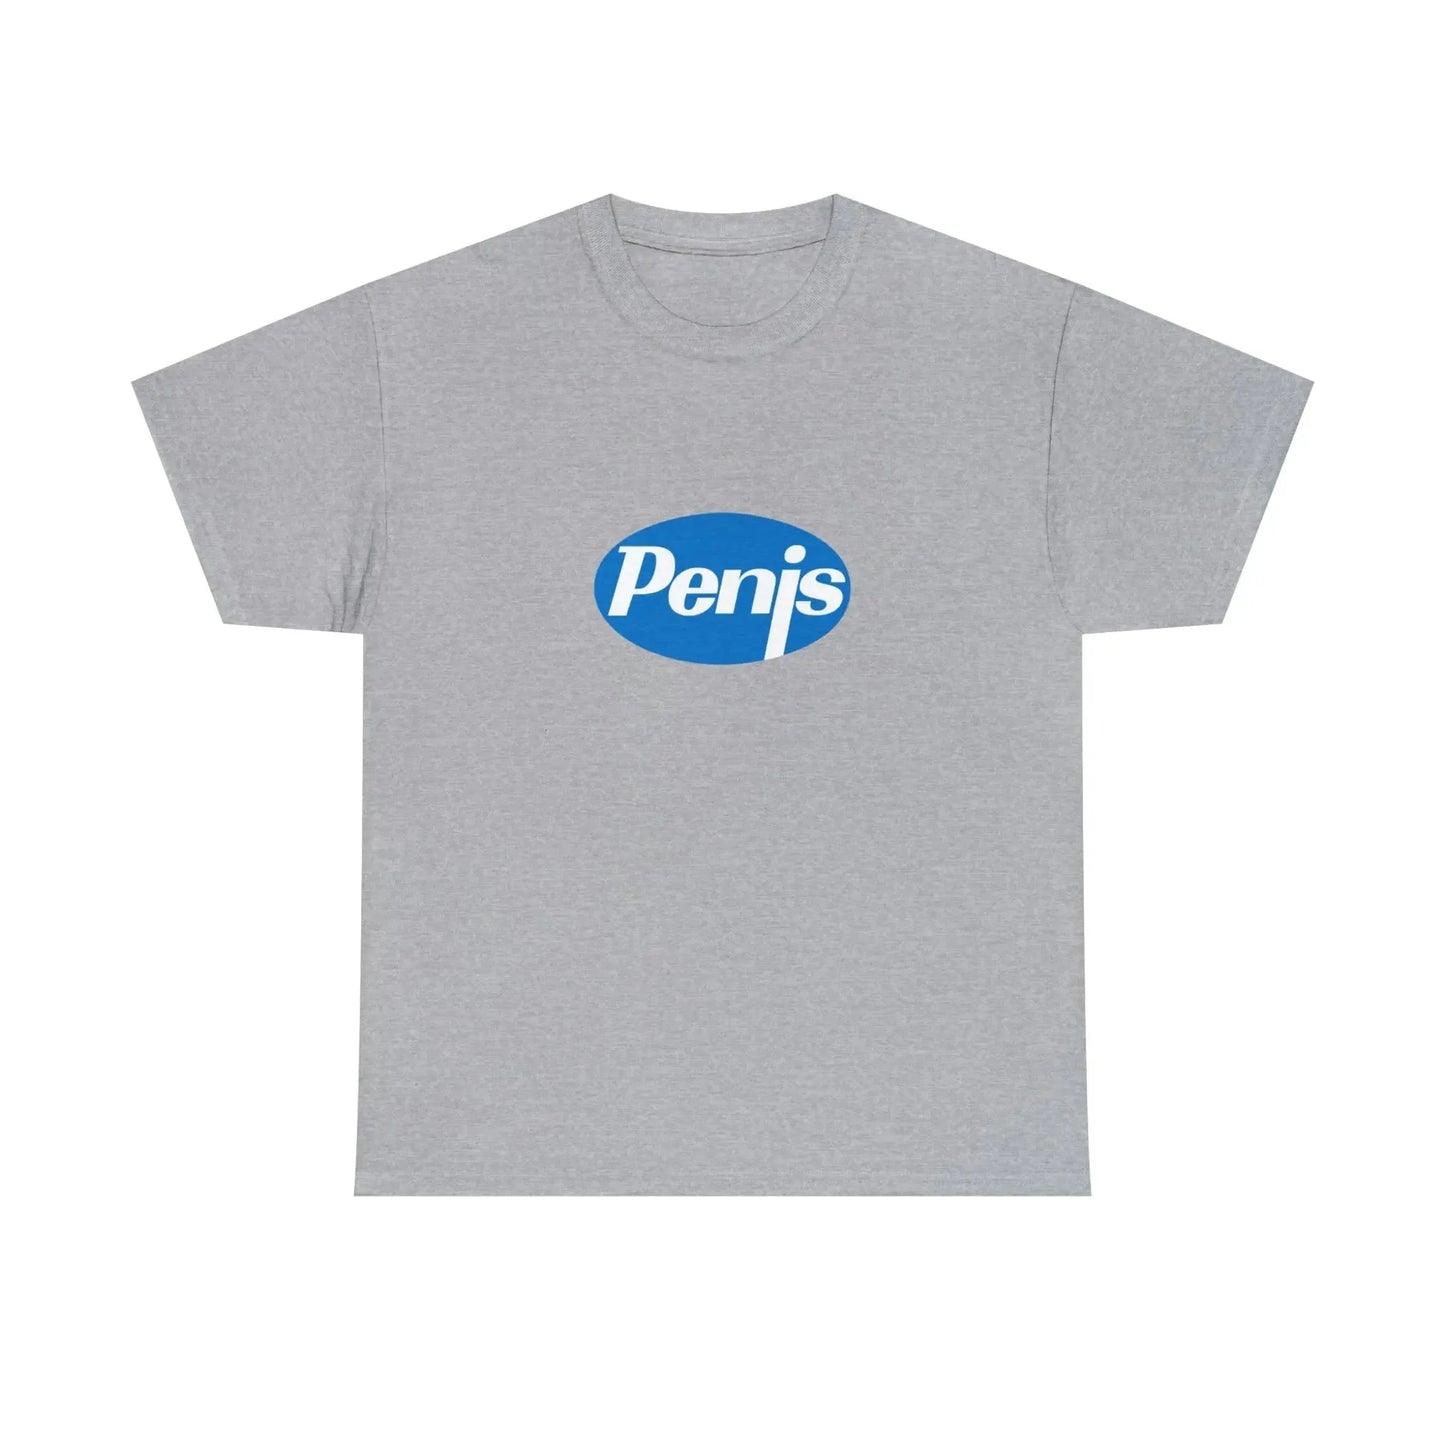 Pfizer Penis T-Shirt - Failure International failureinternational.com store brand tiktok instagram